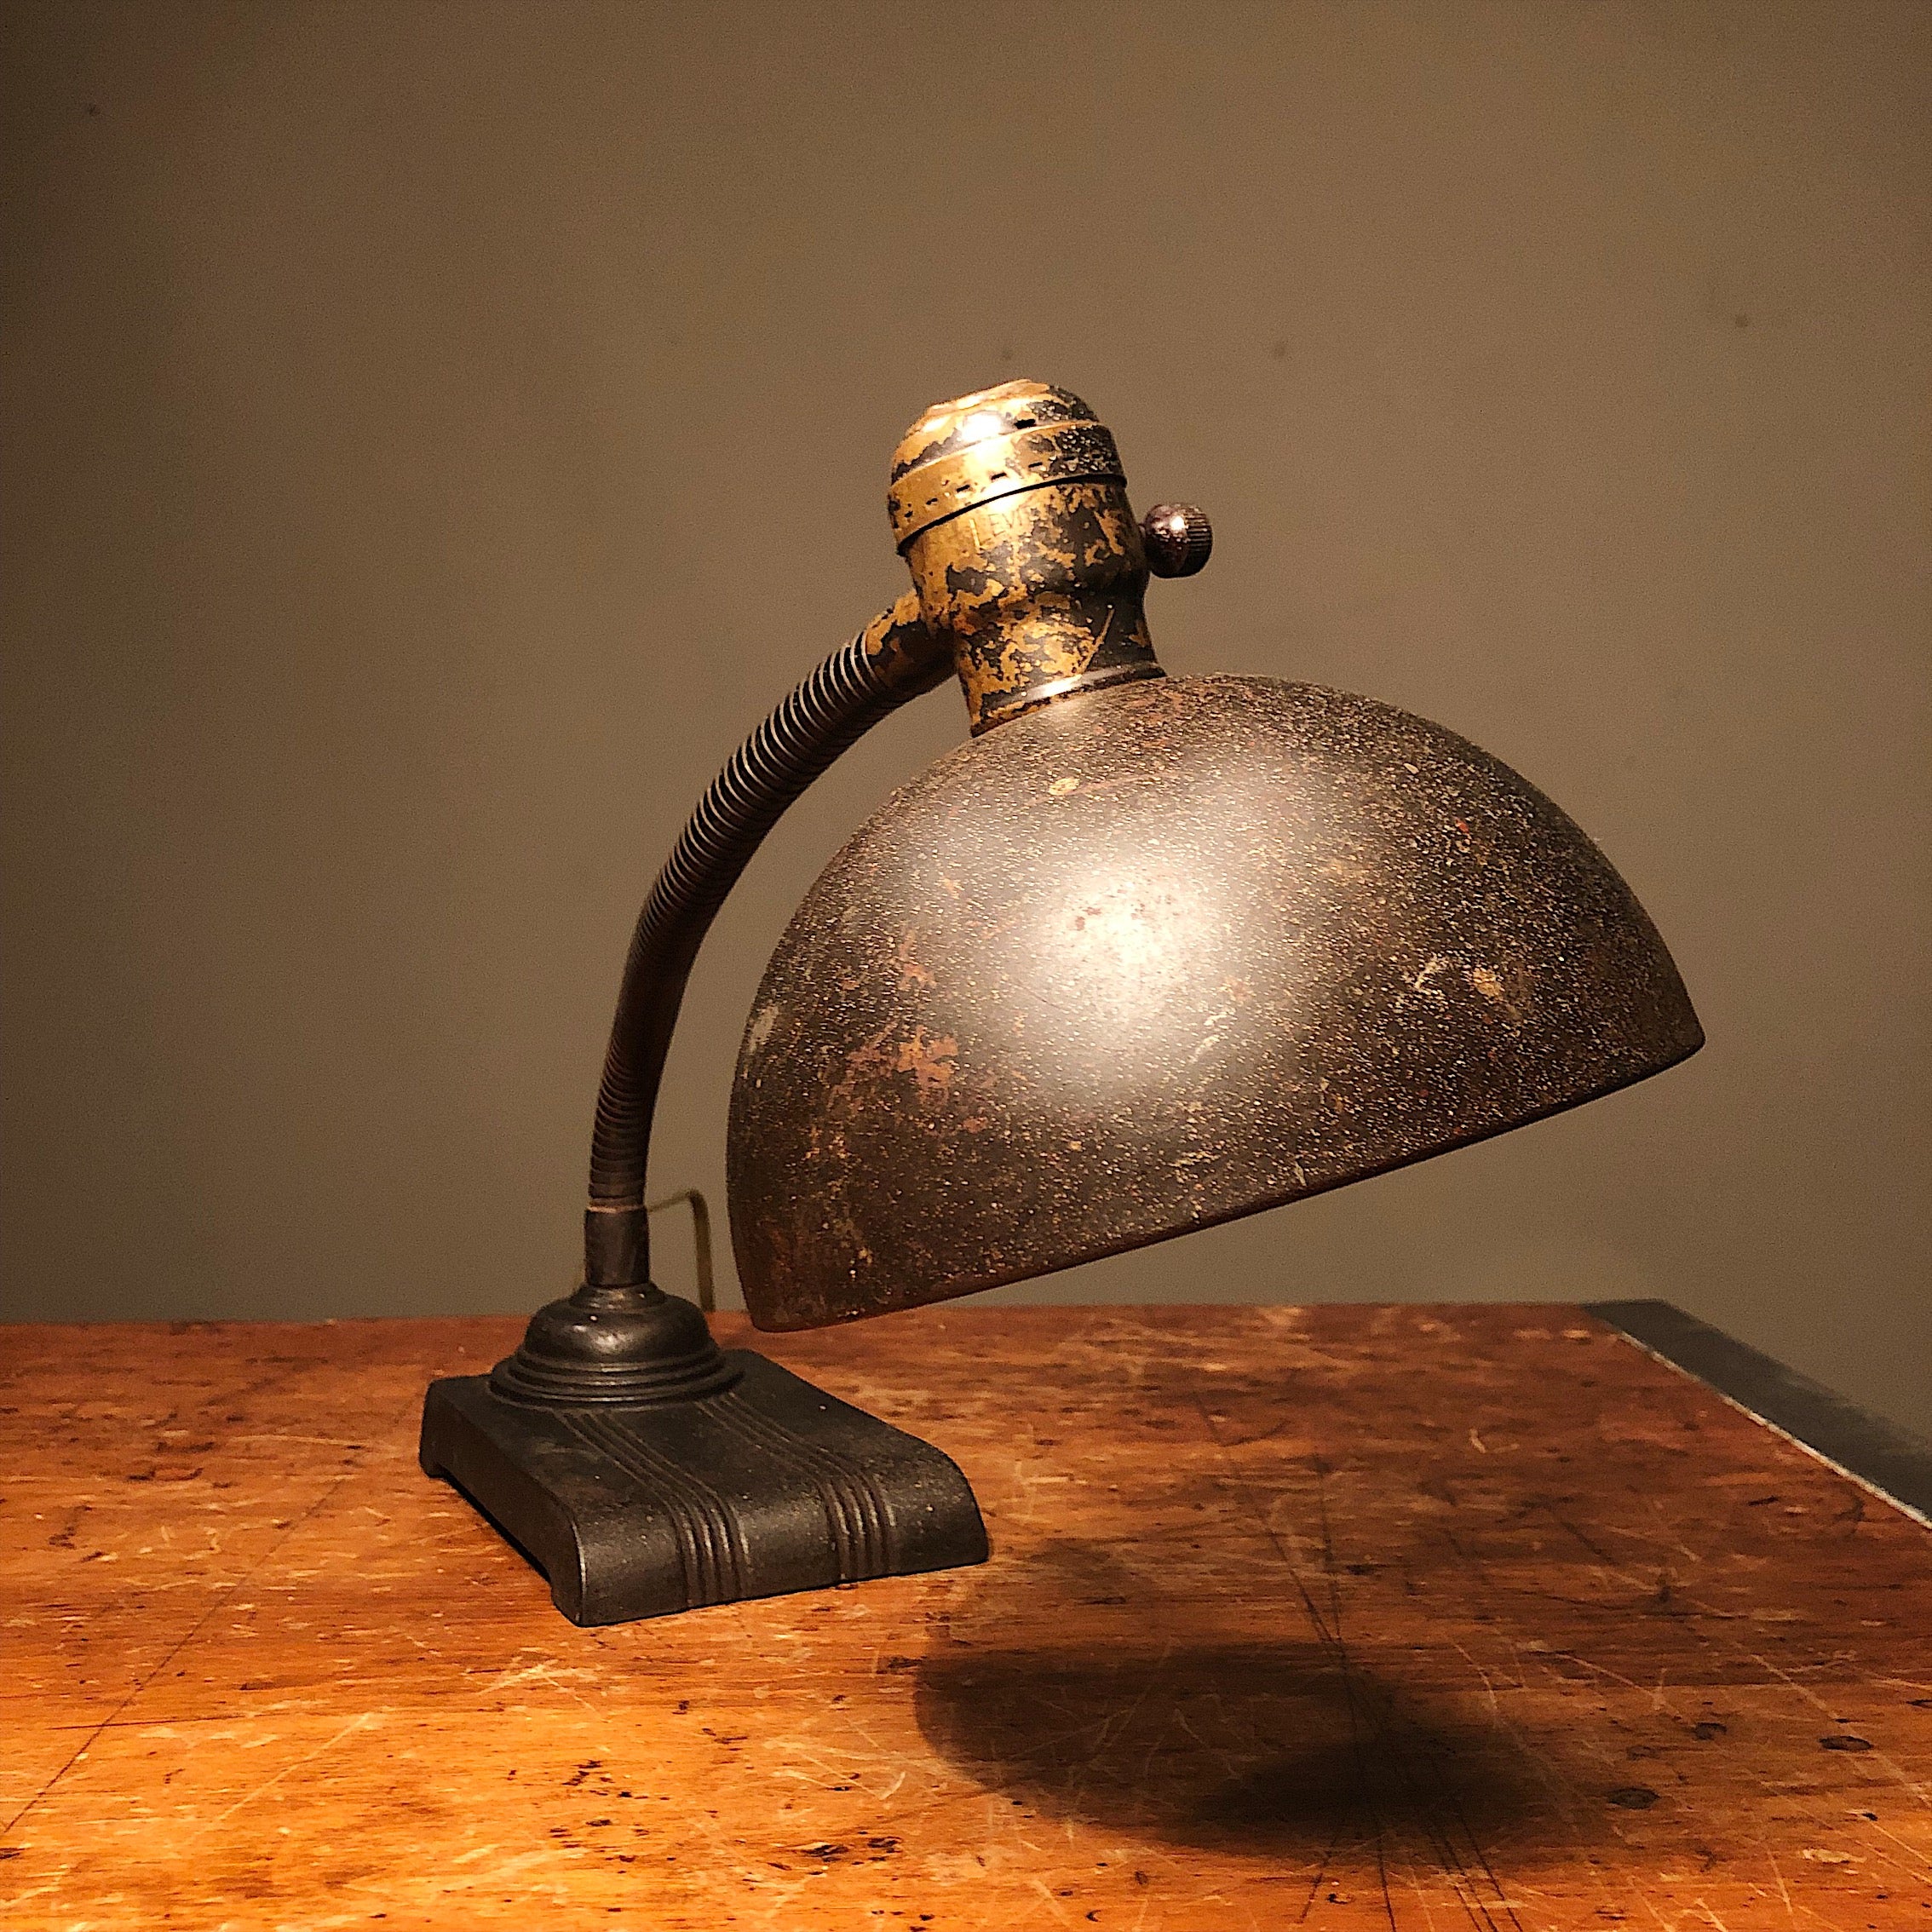 Antique Gooseneck Desk Lamp with Unusual Shade - 1920s Art Deco - Industrial Gun Metal Light